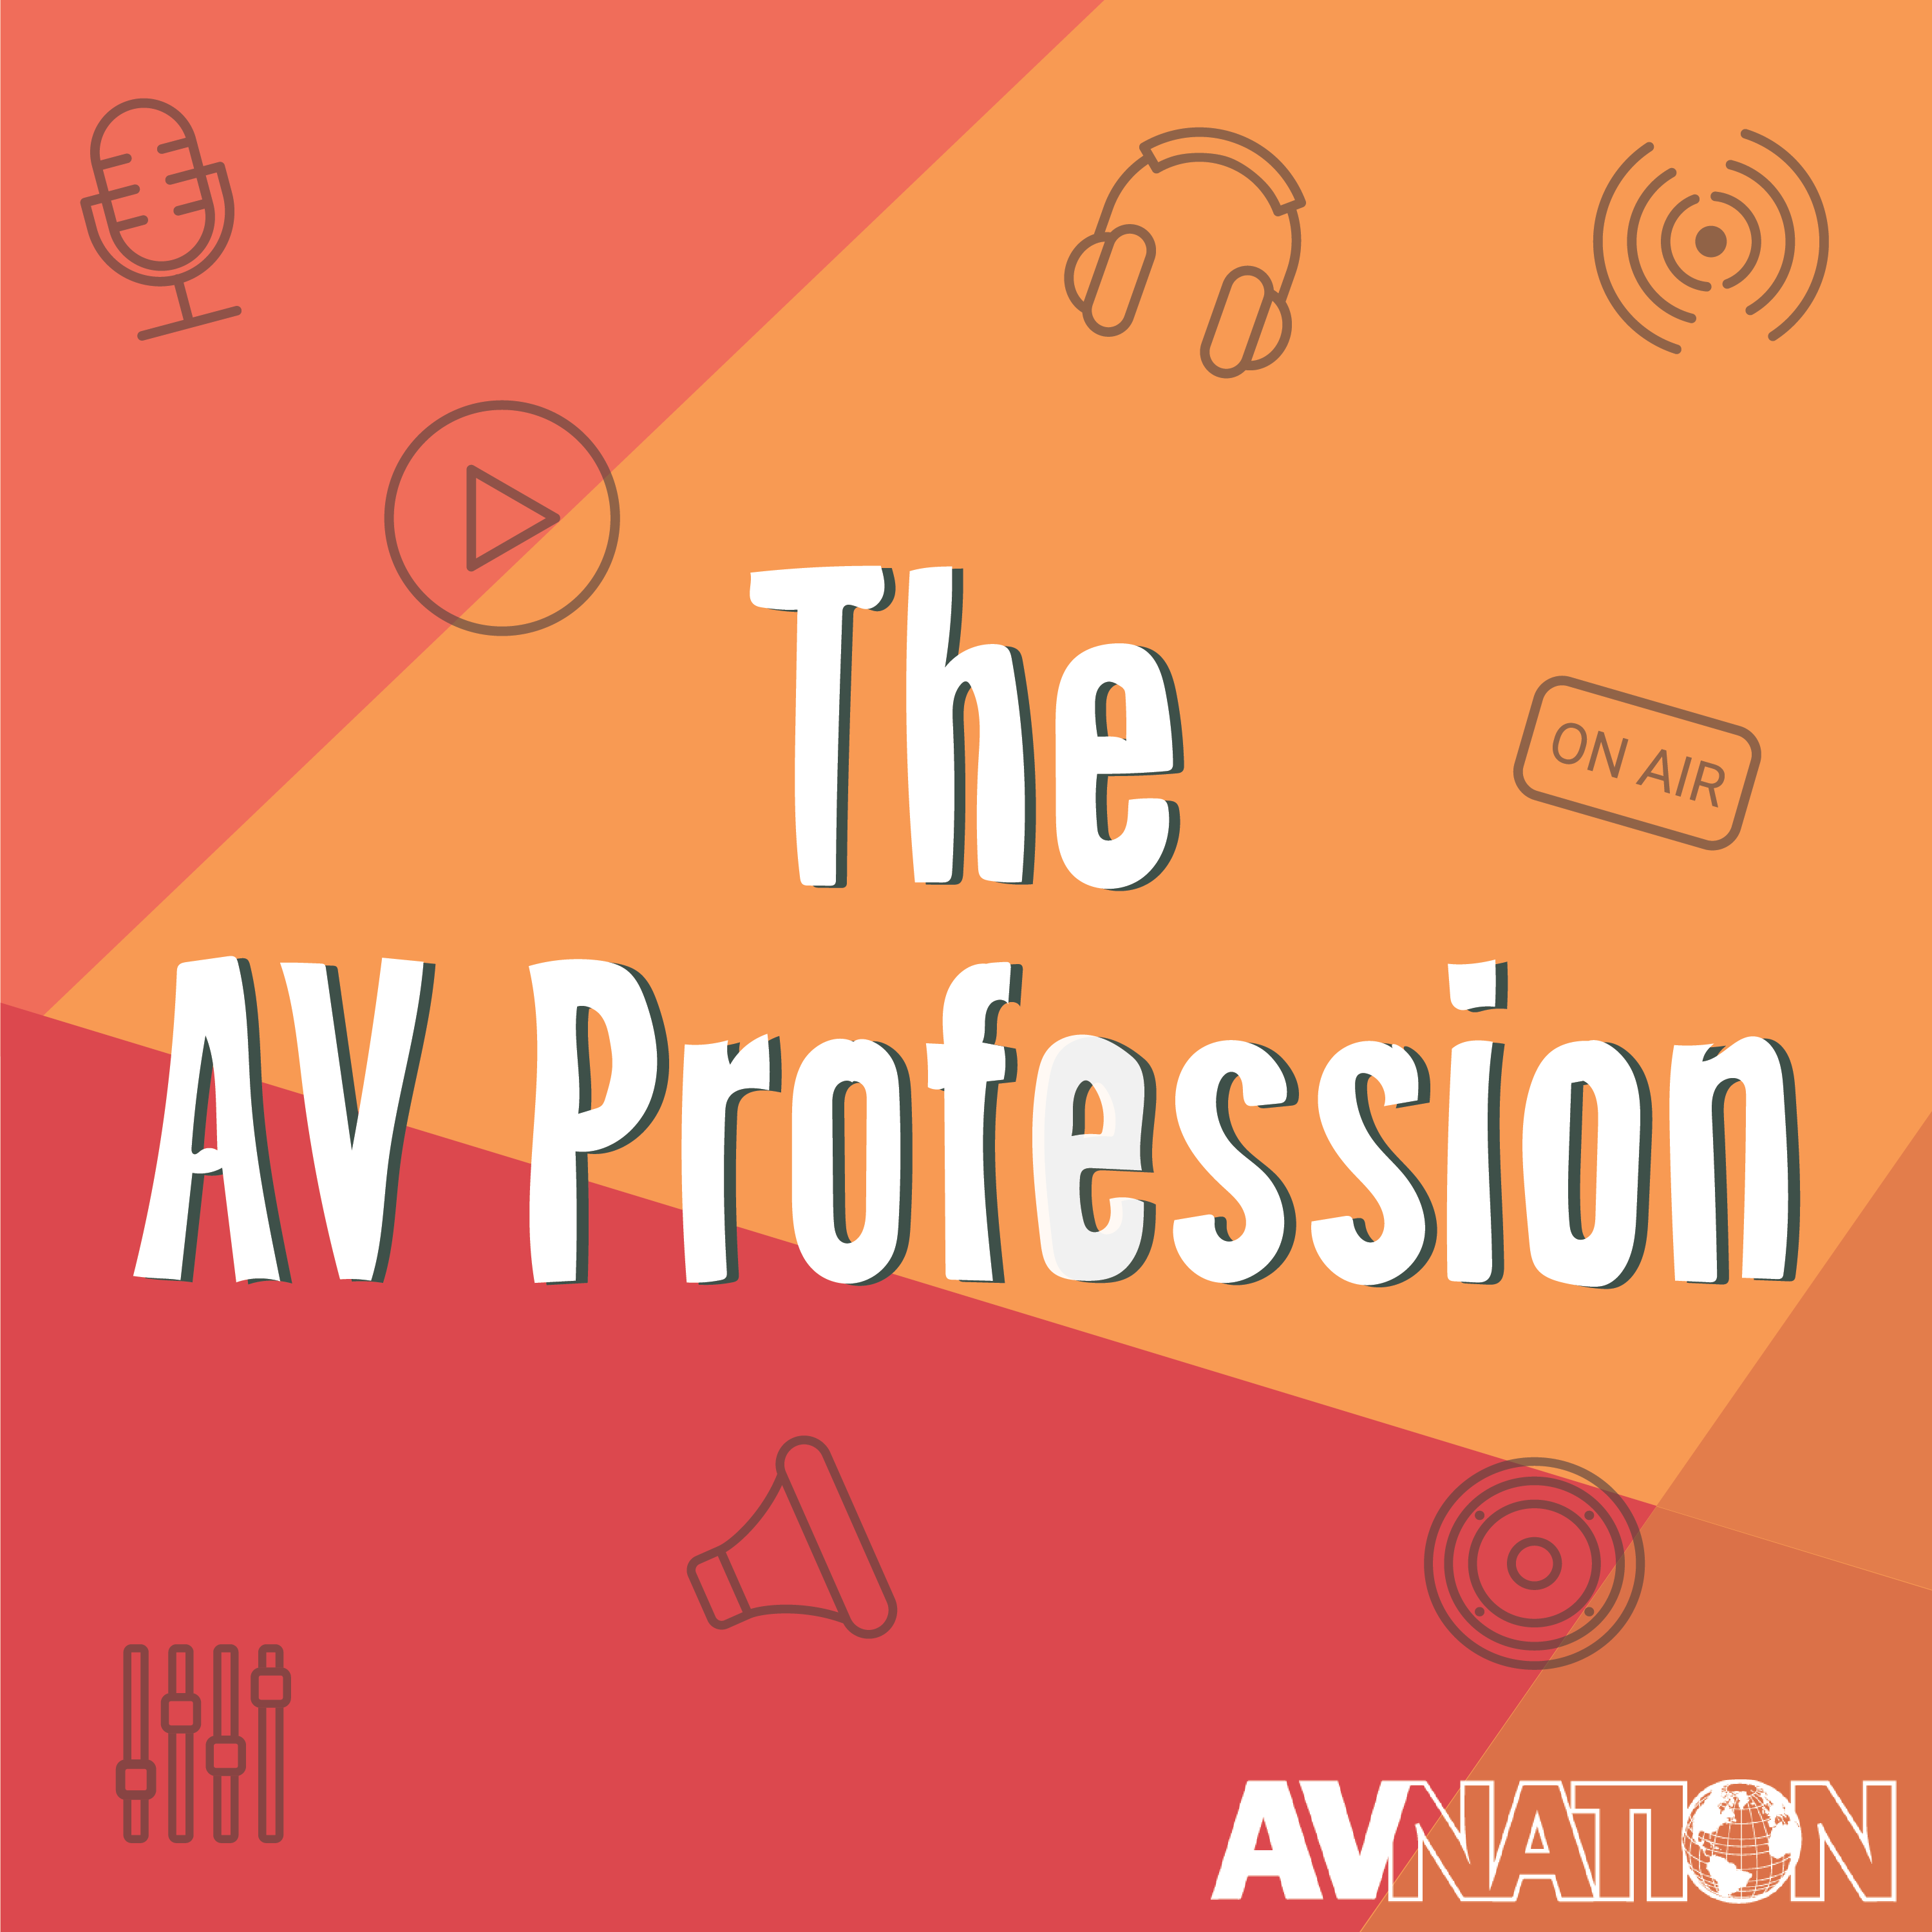 The AV Profession